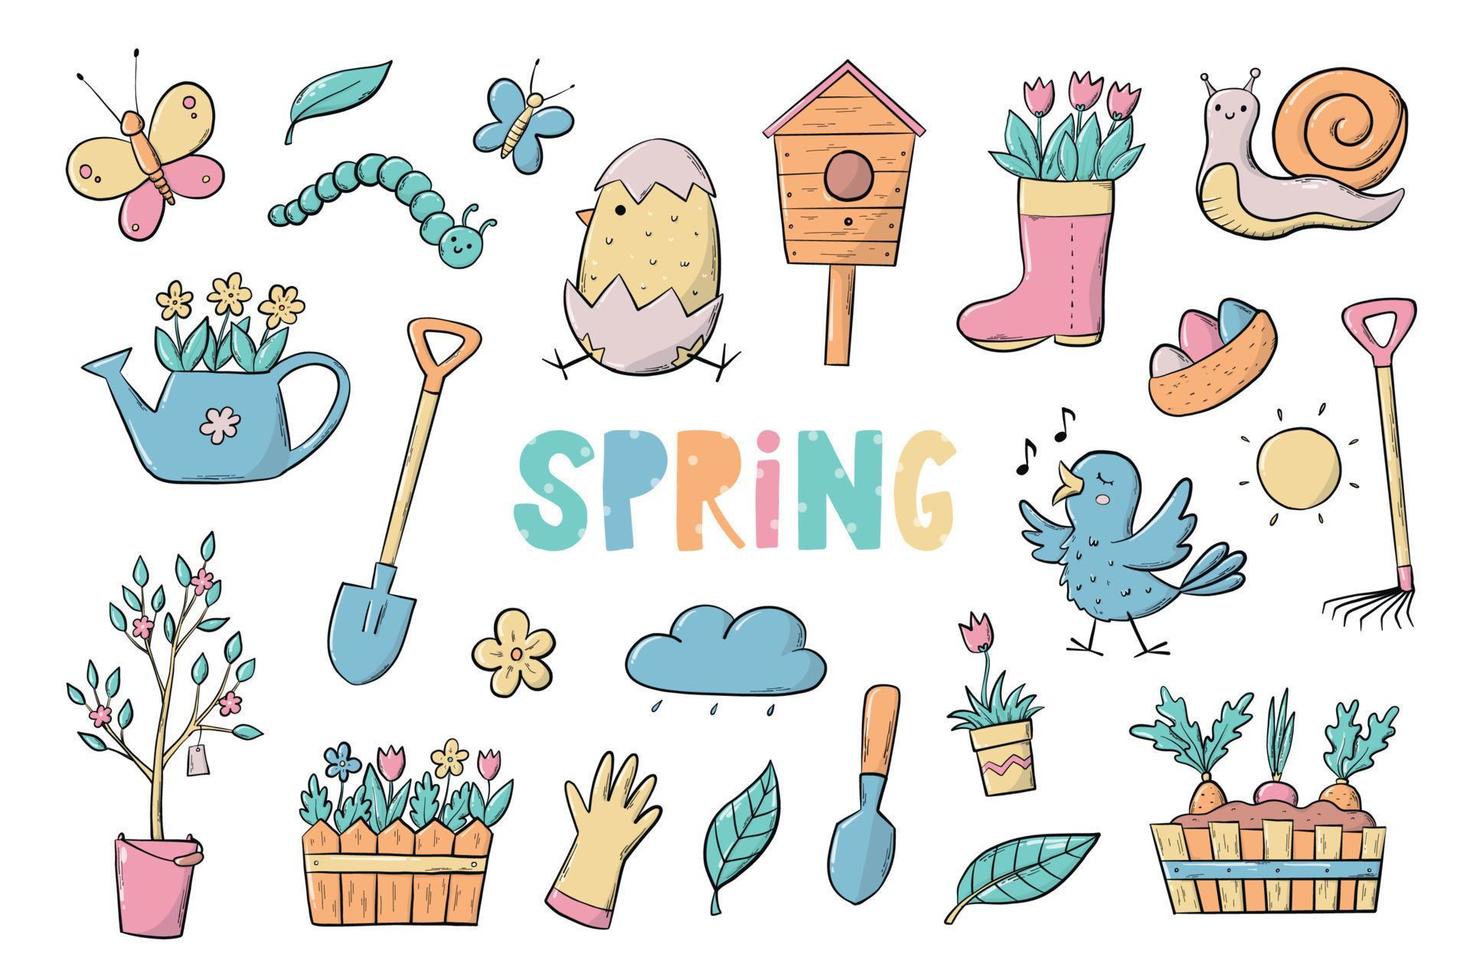 Spring clip art, nursery doodles, stickers, prints, cartoon elements. EPS 10 vector